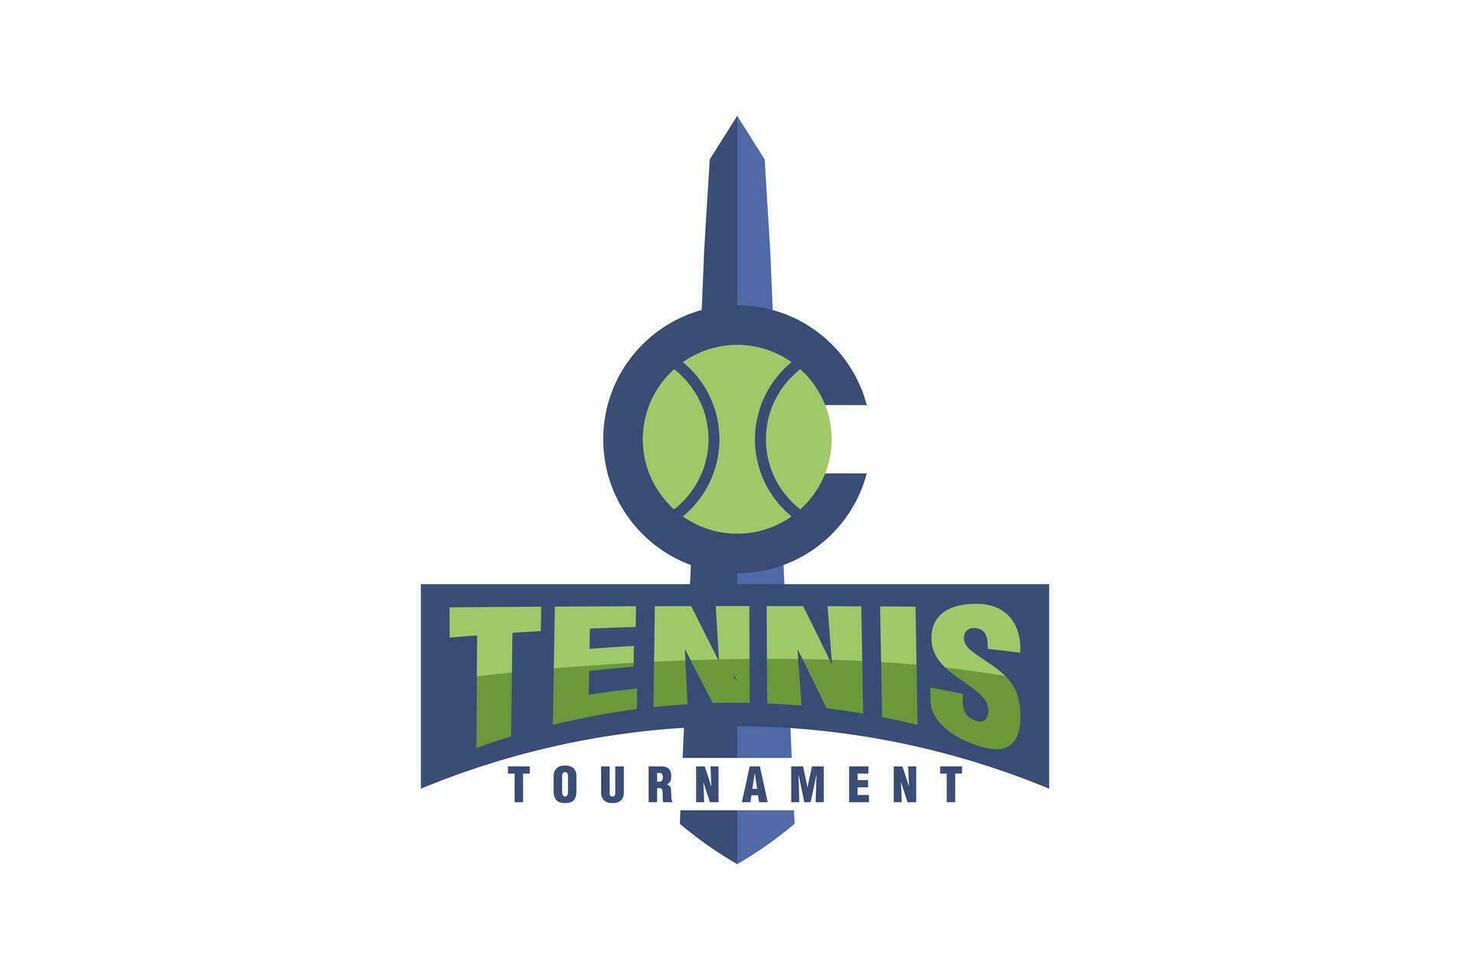 Tennis Tournament and Washington Monument logo design vector template